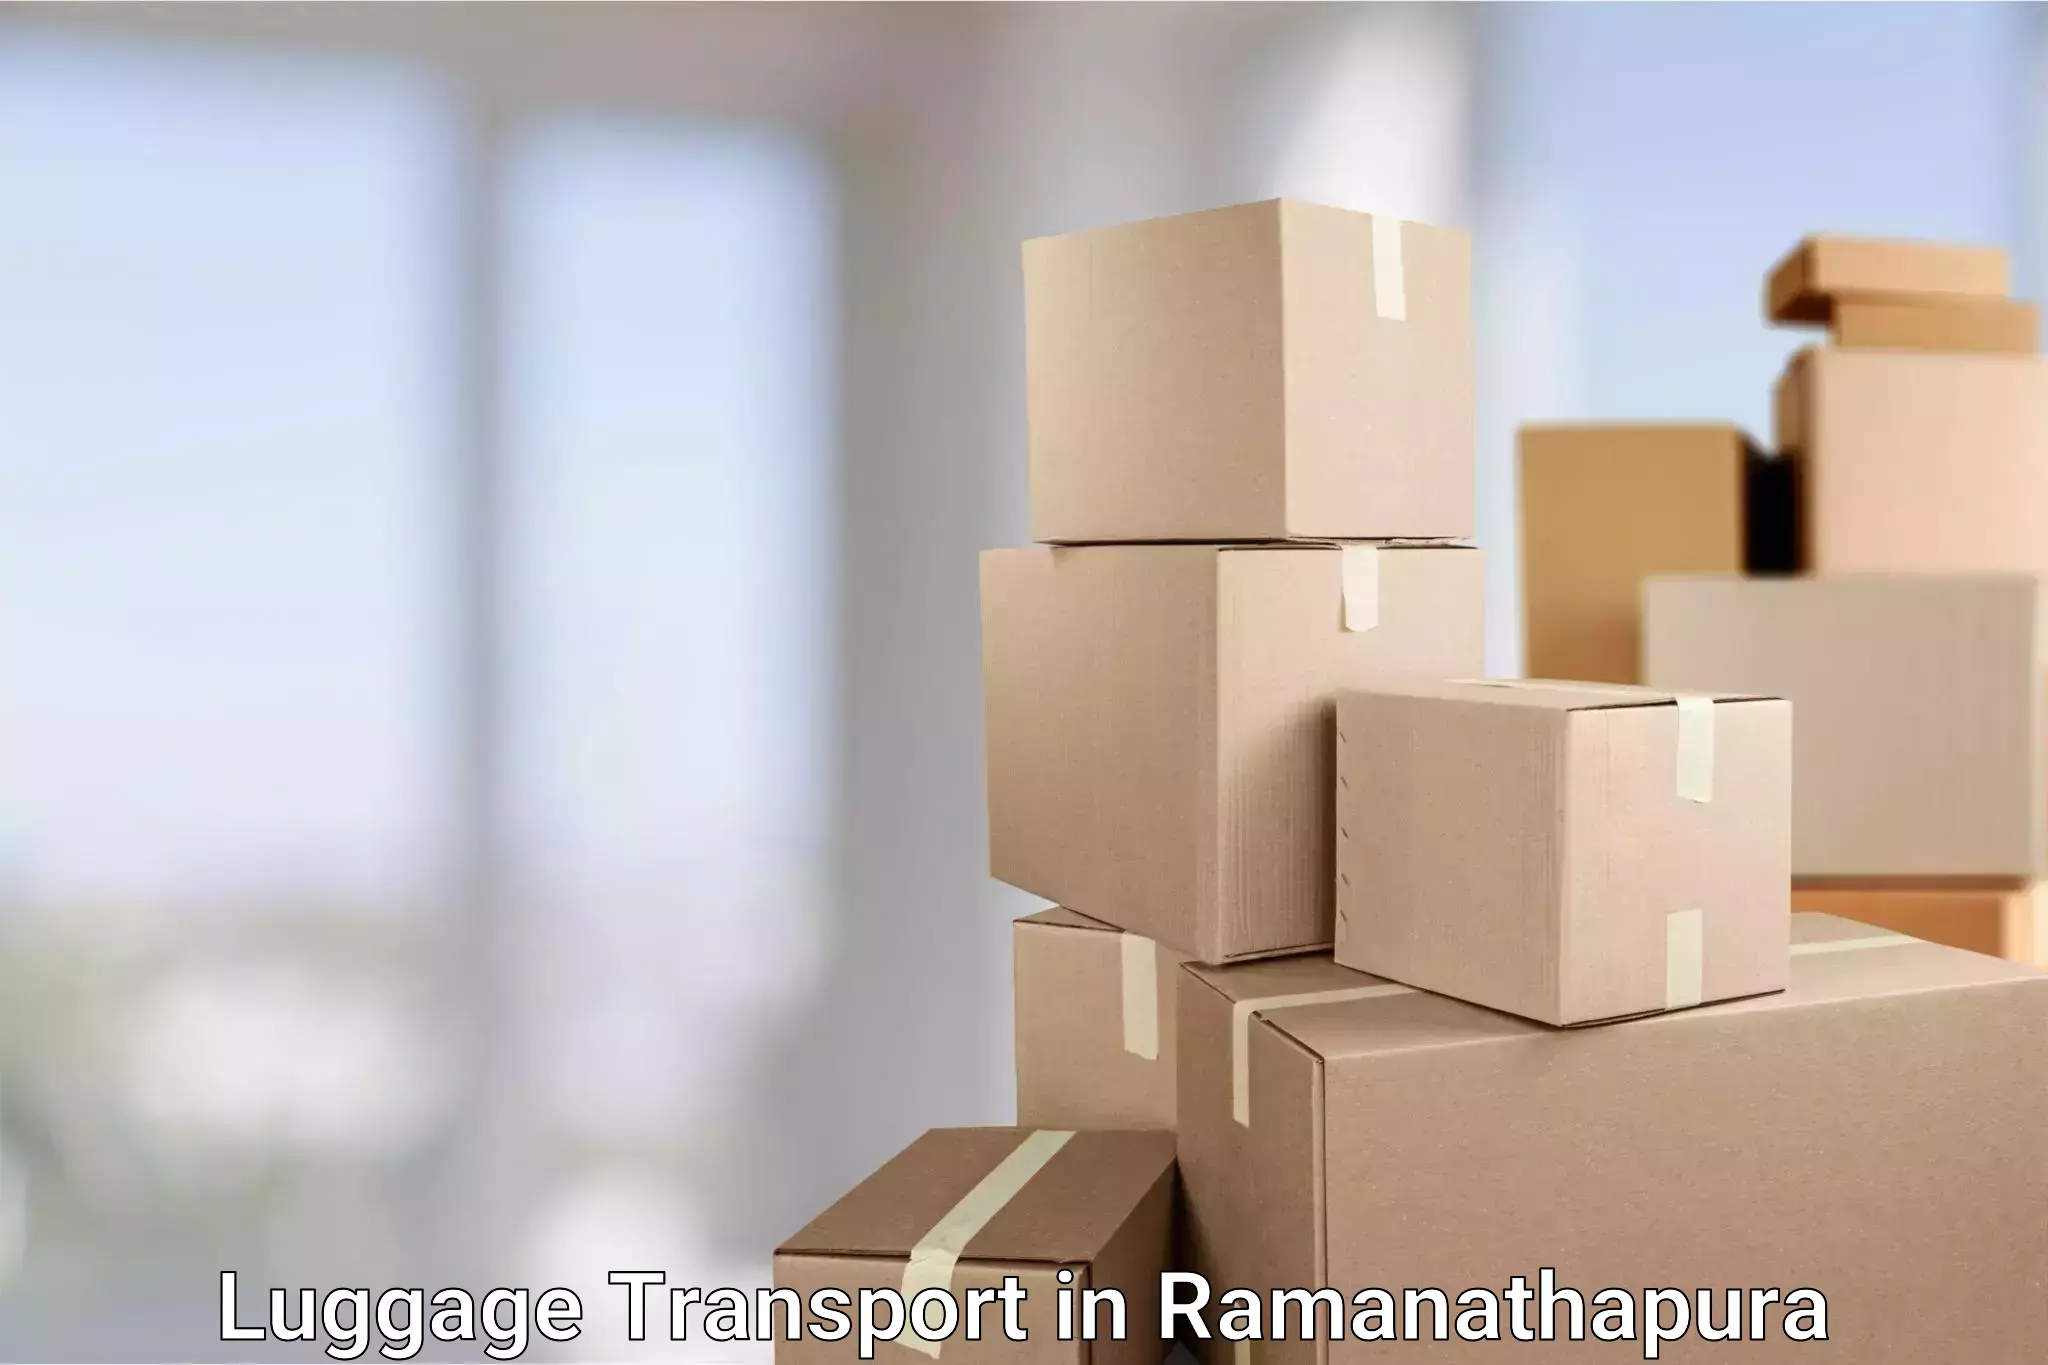 Luggage transport service in Ramanathapura